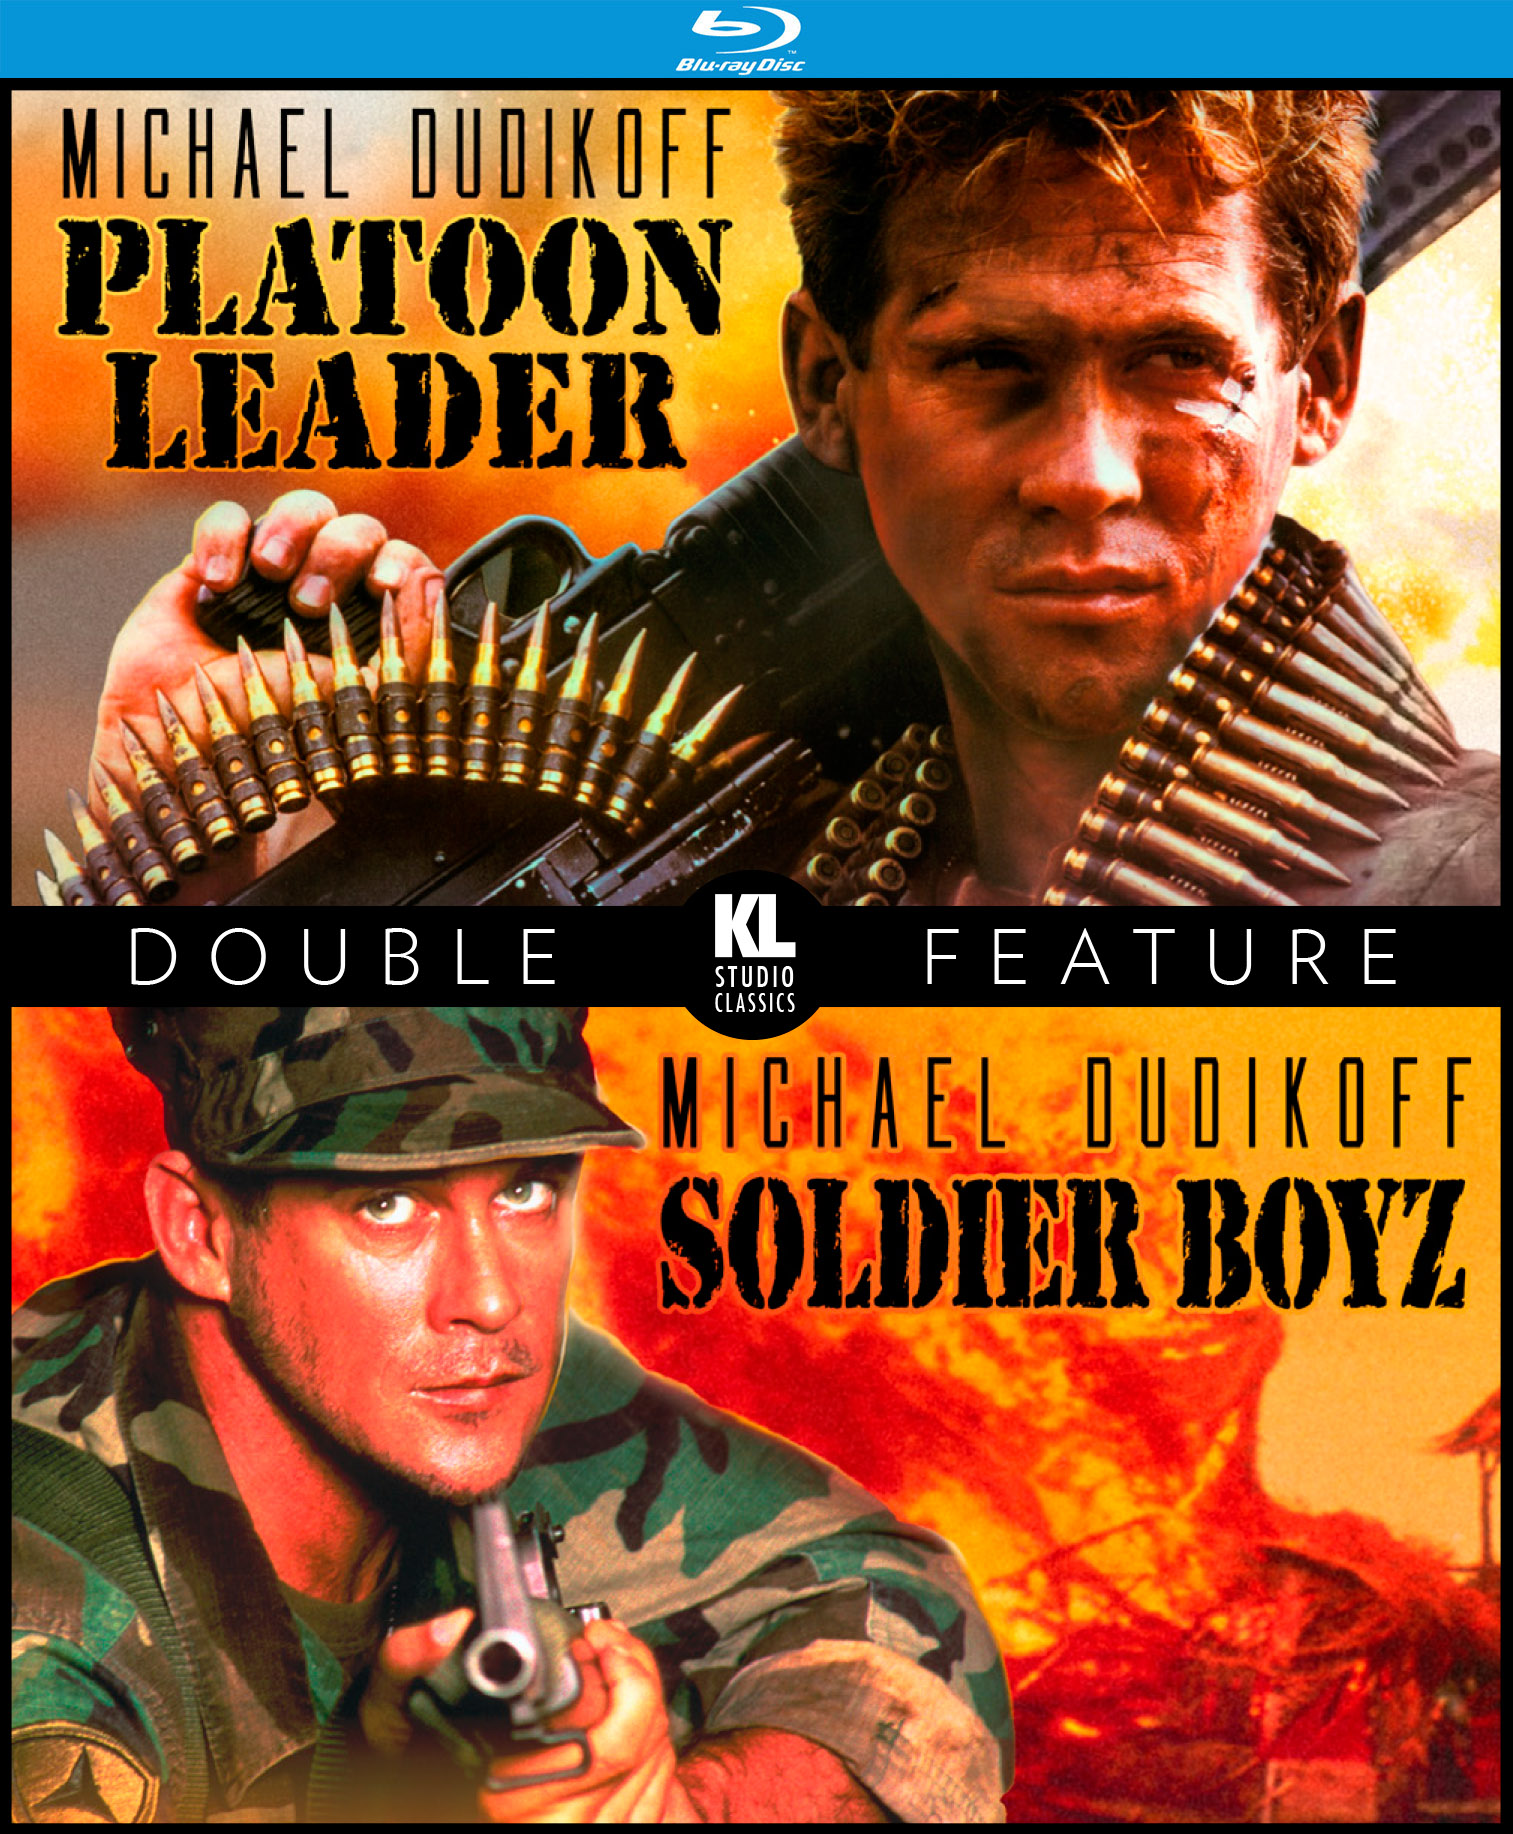 Platoon Blu-ray & DVD Review